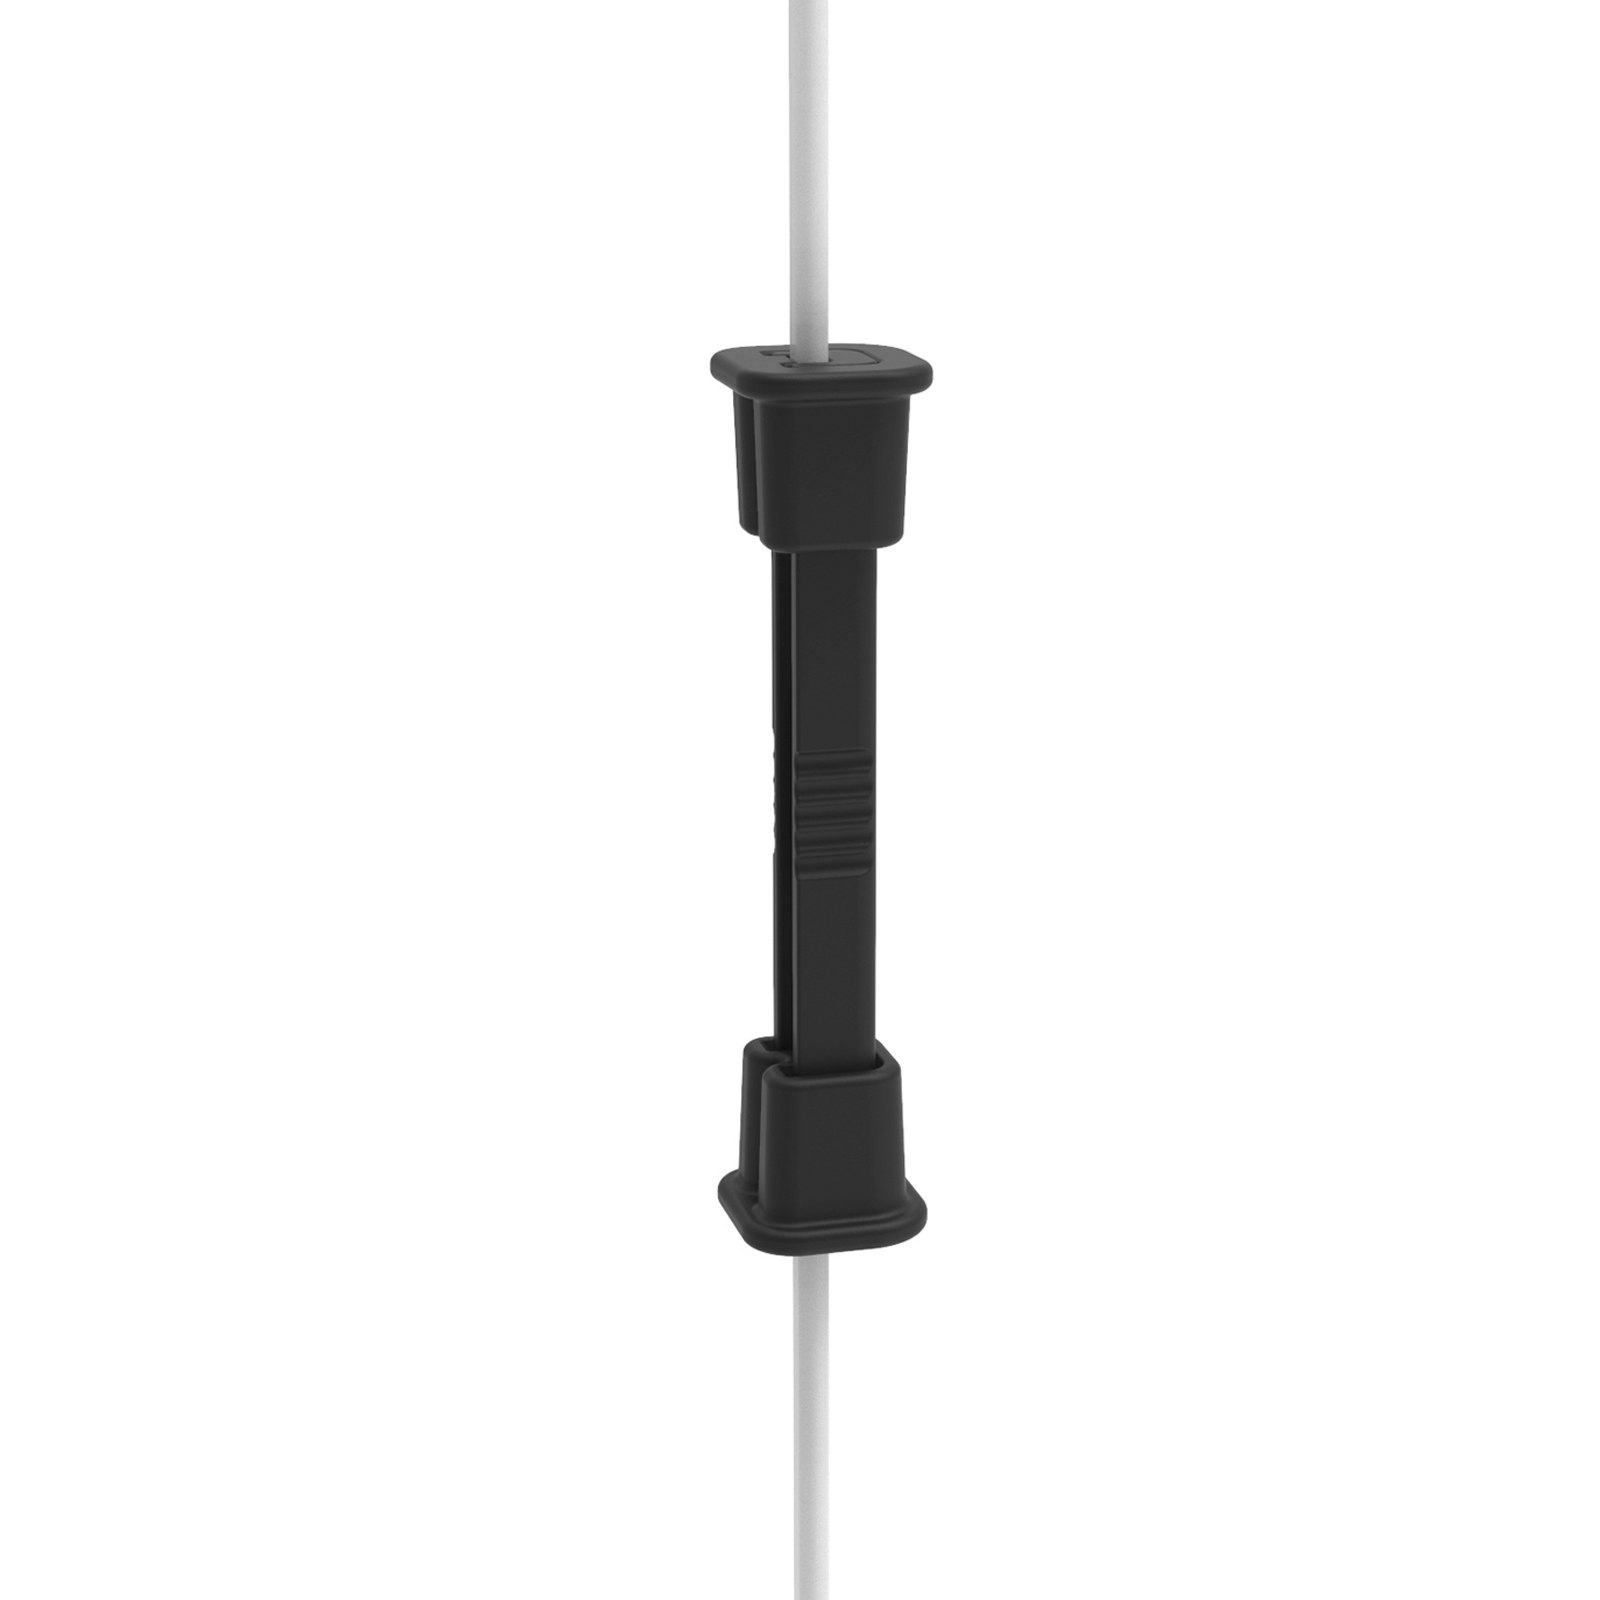 Litzclip Repair kit for Vertical Braces in Electric Nets